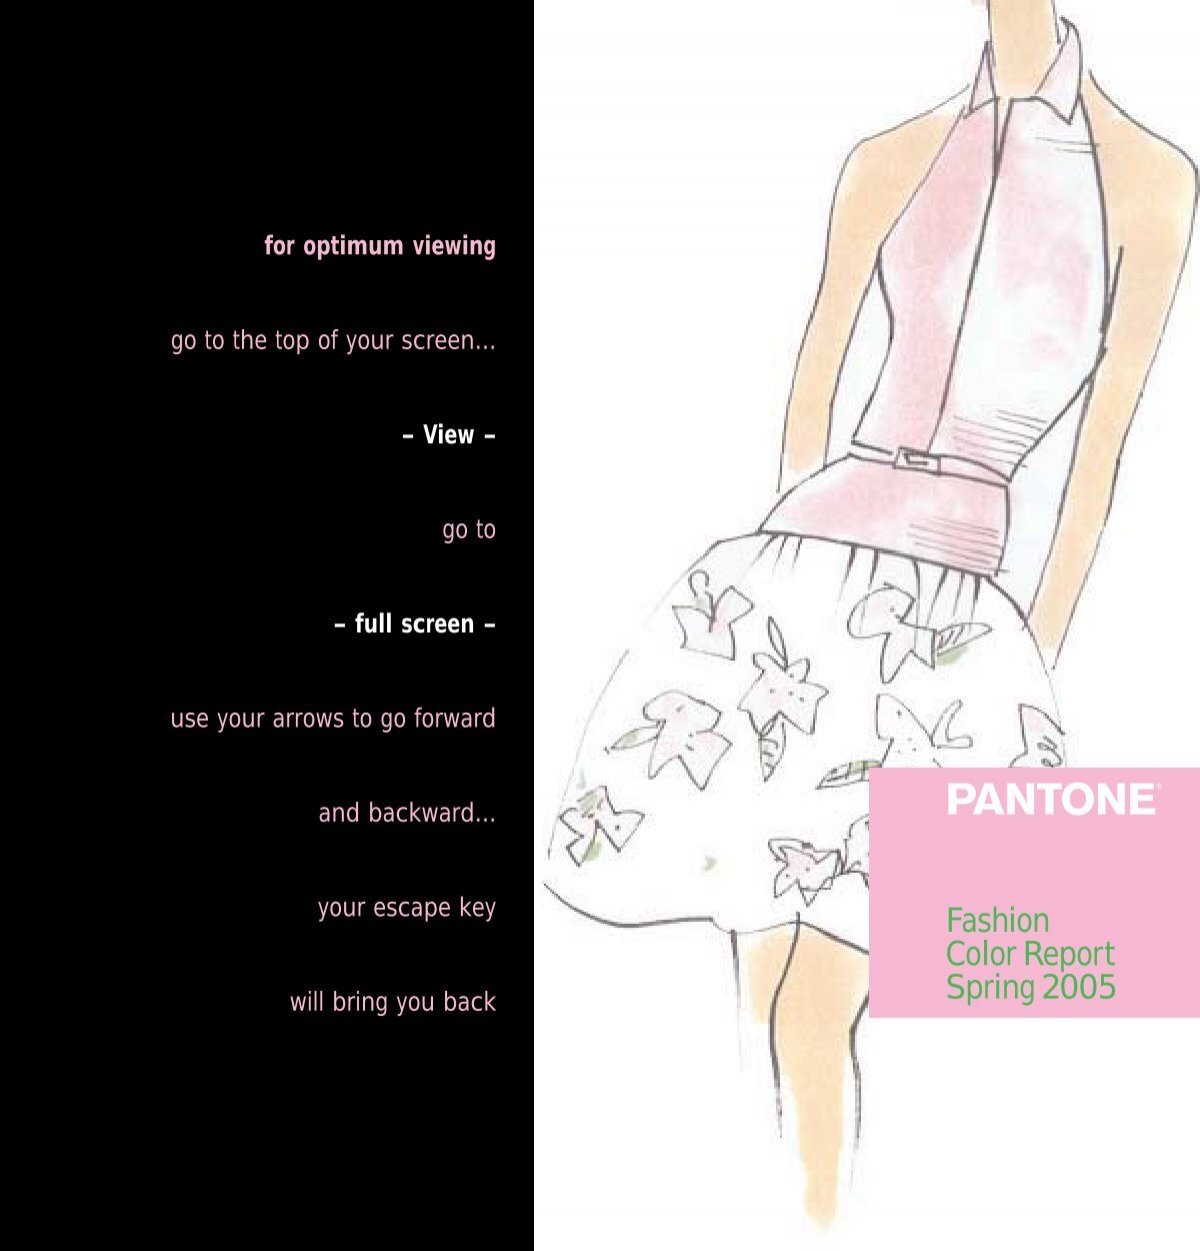 Fashion Color Report Spring 2005 - Pantone